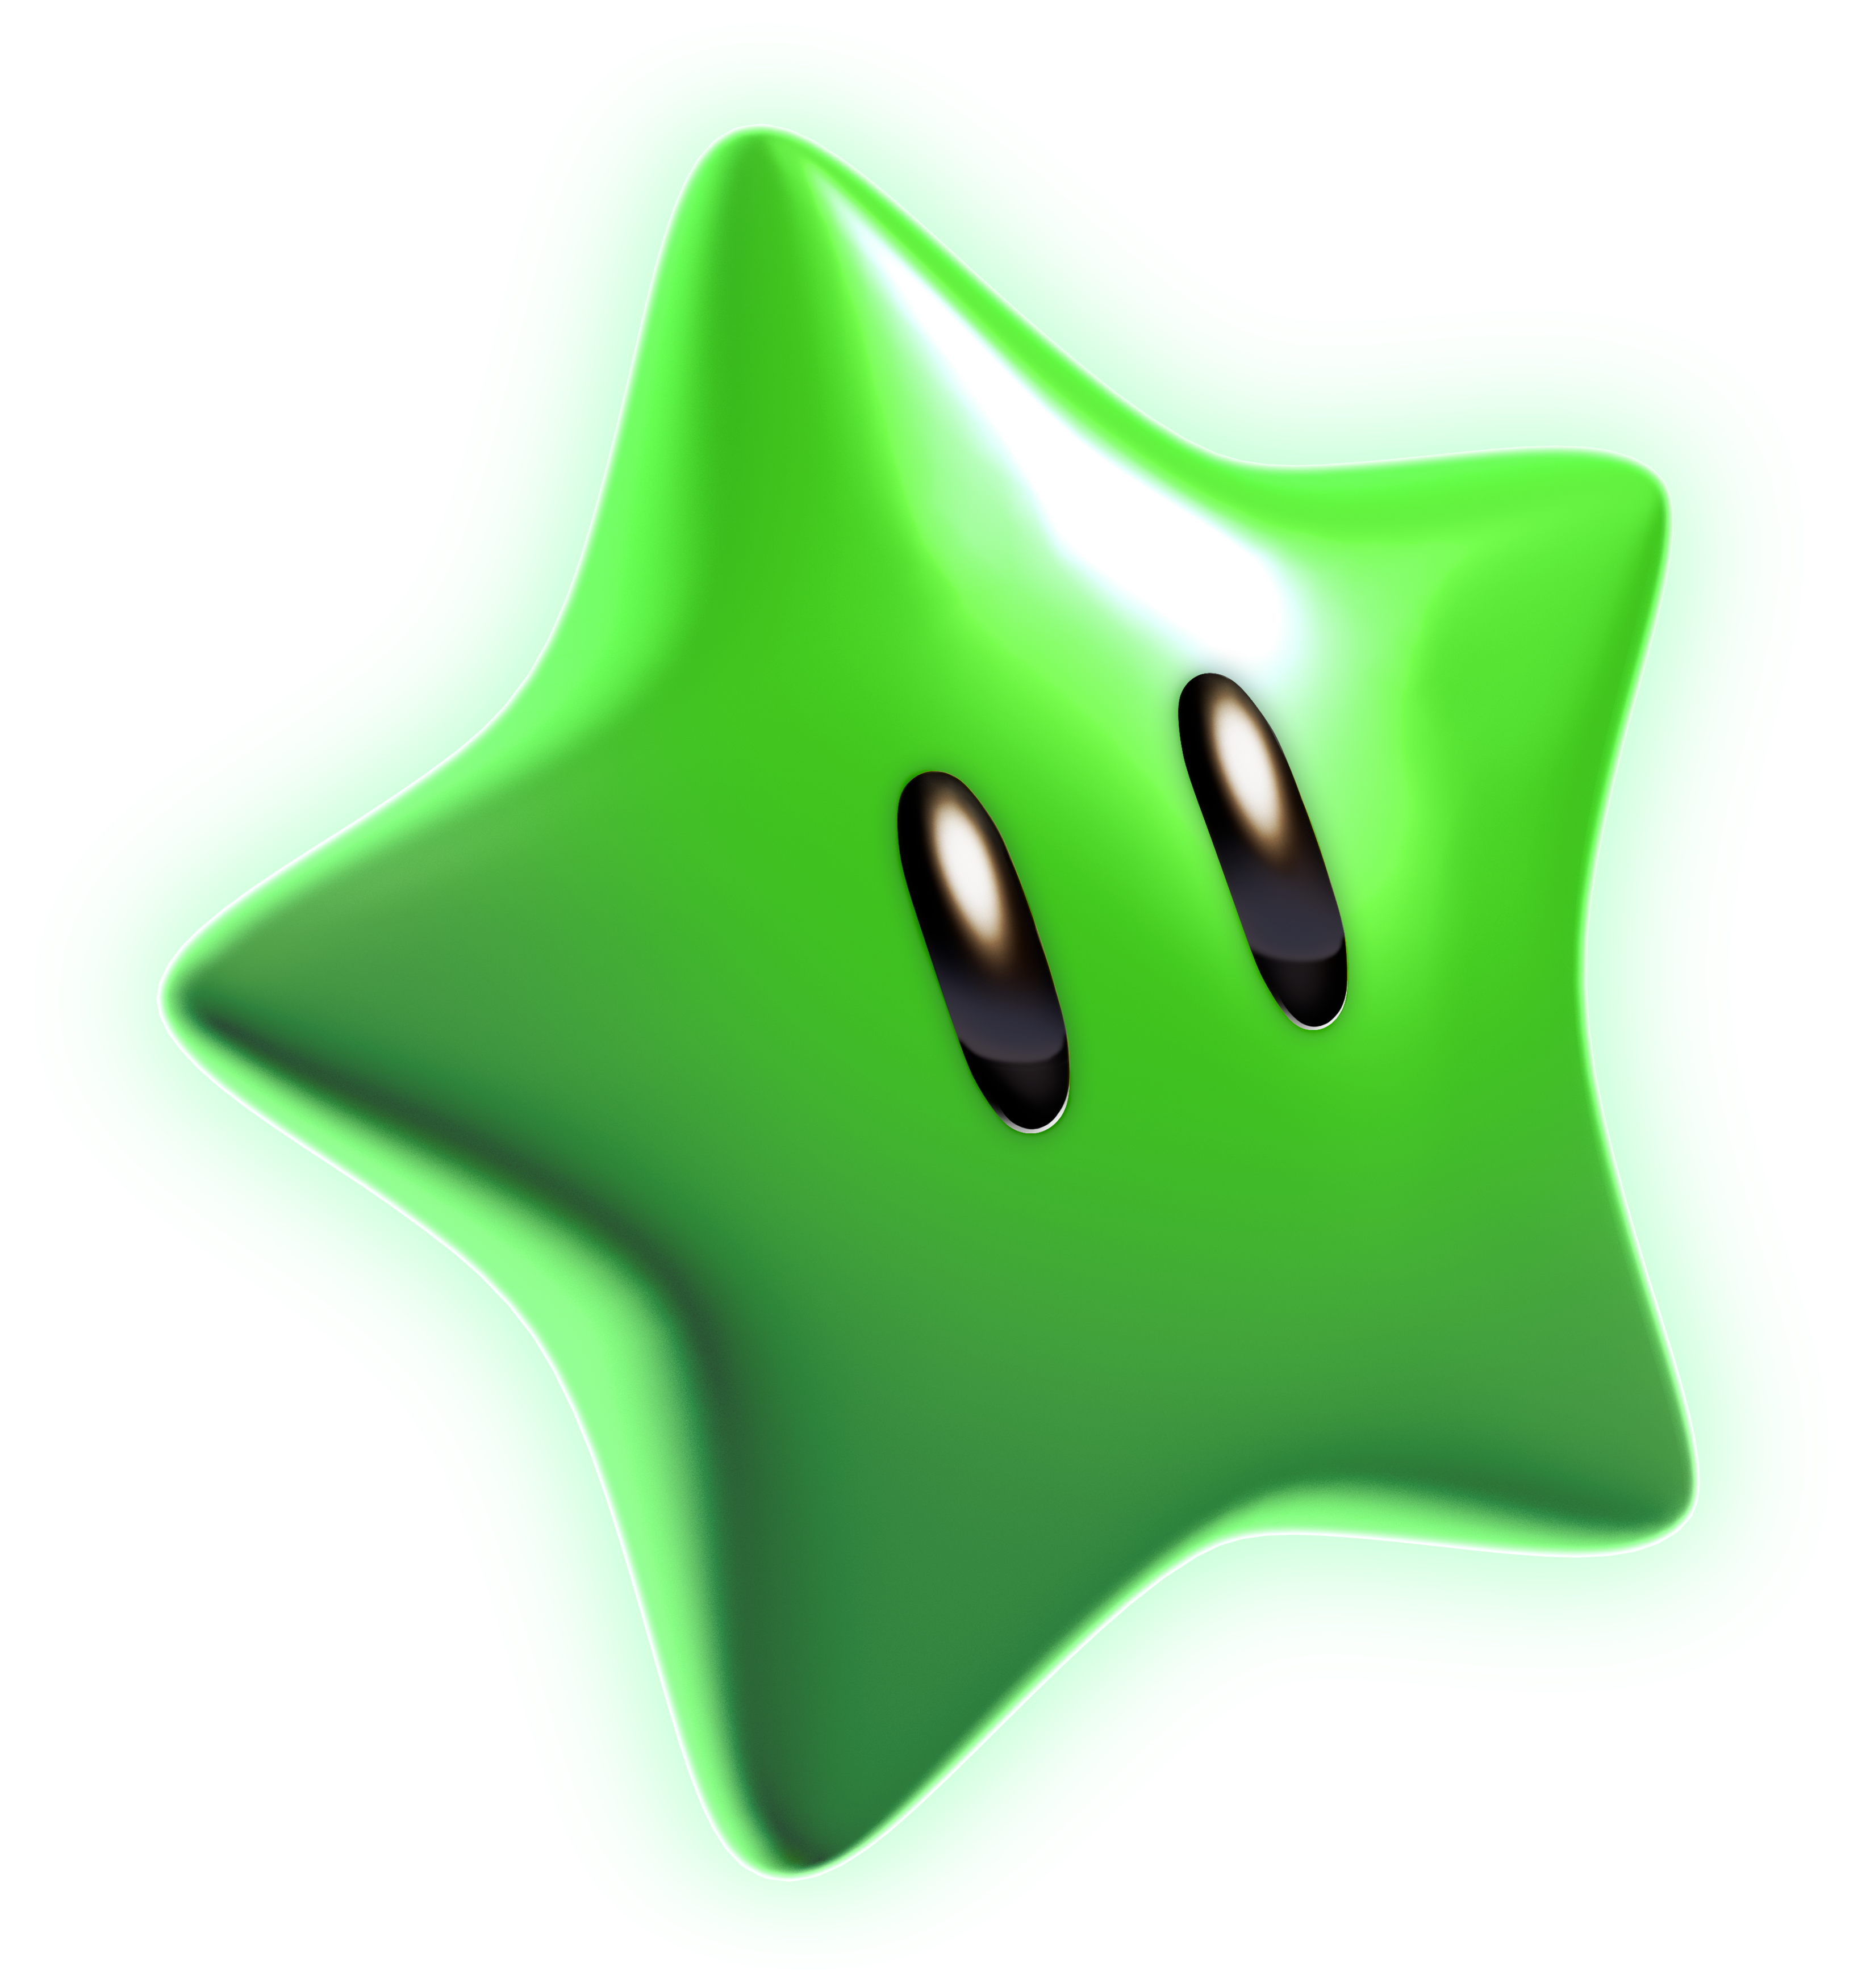 Mario star clipart